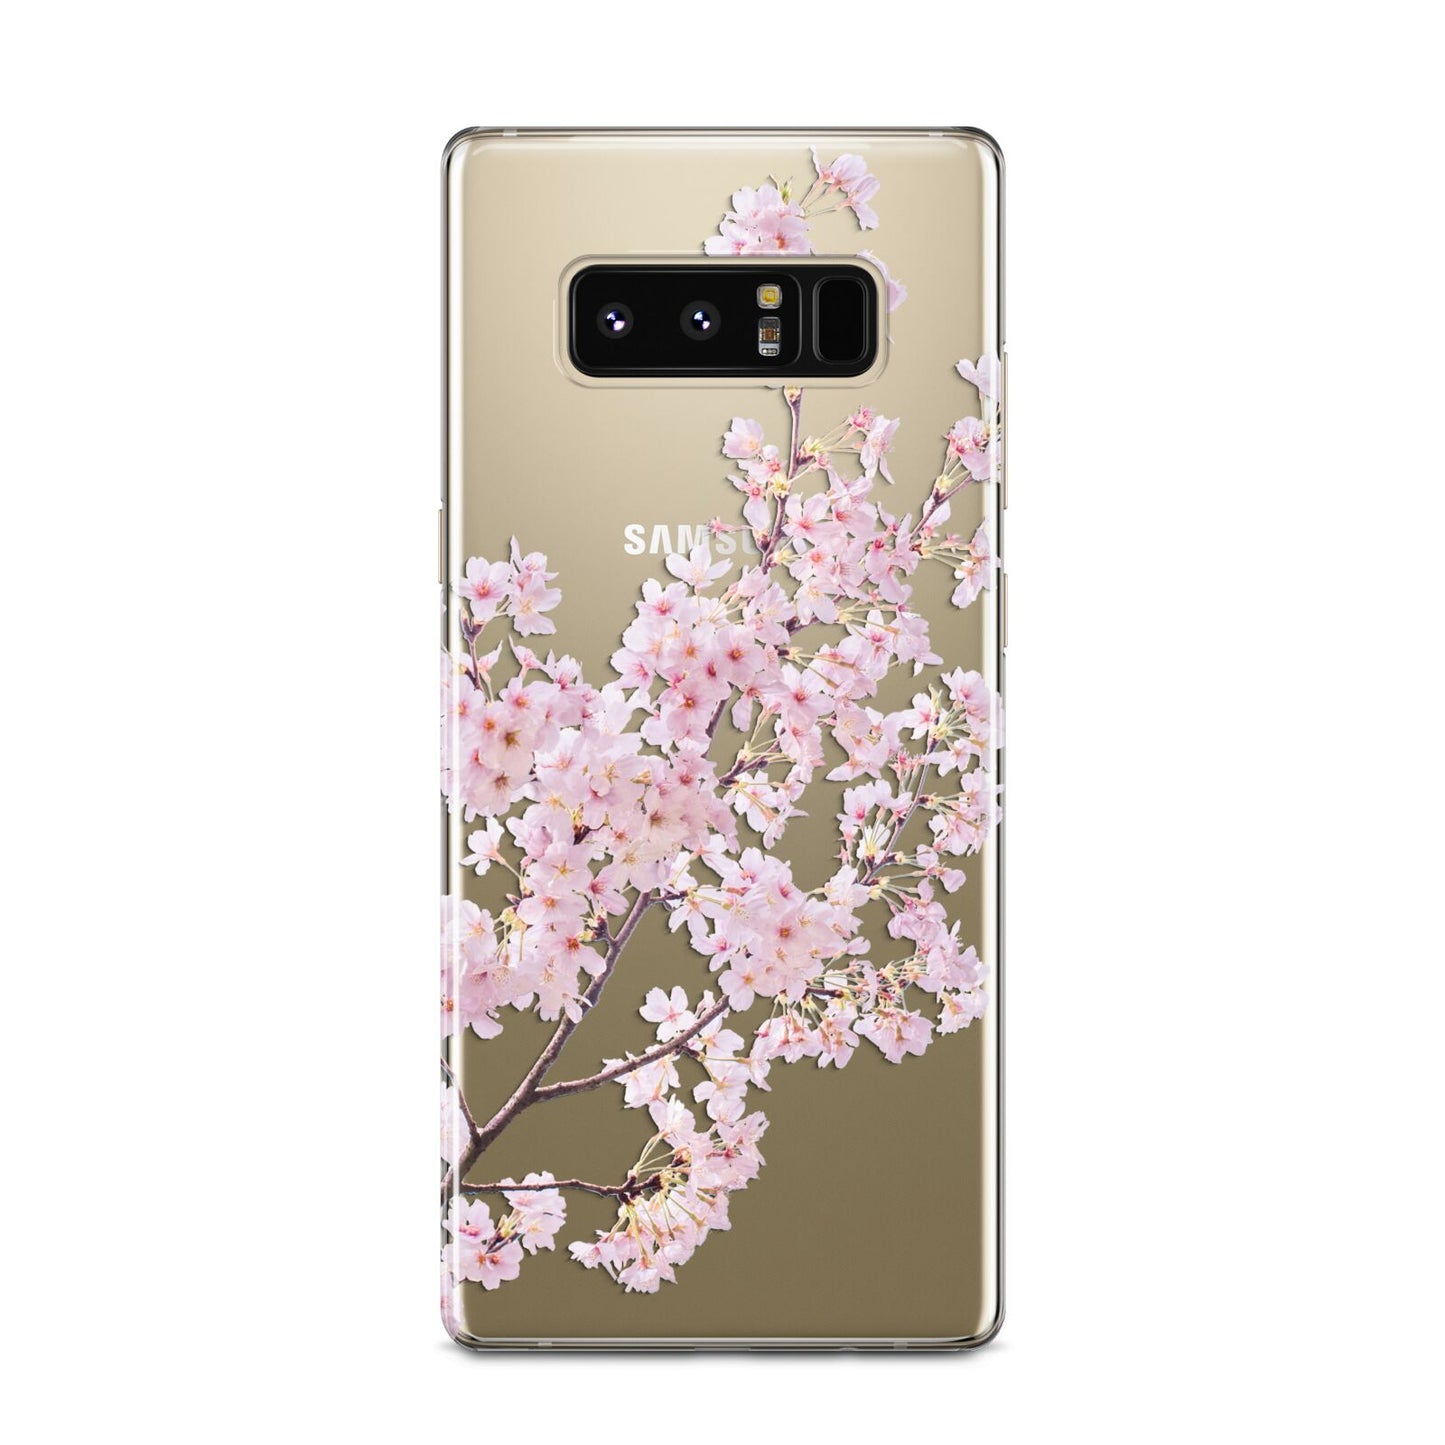 Blossom Tree Samsung Galaxy Note 8 Case